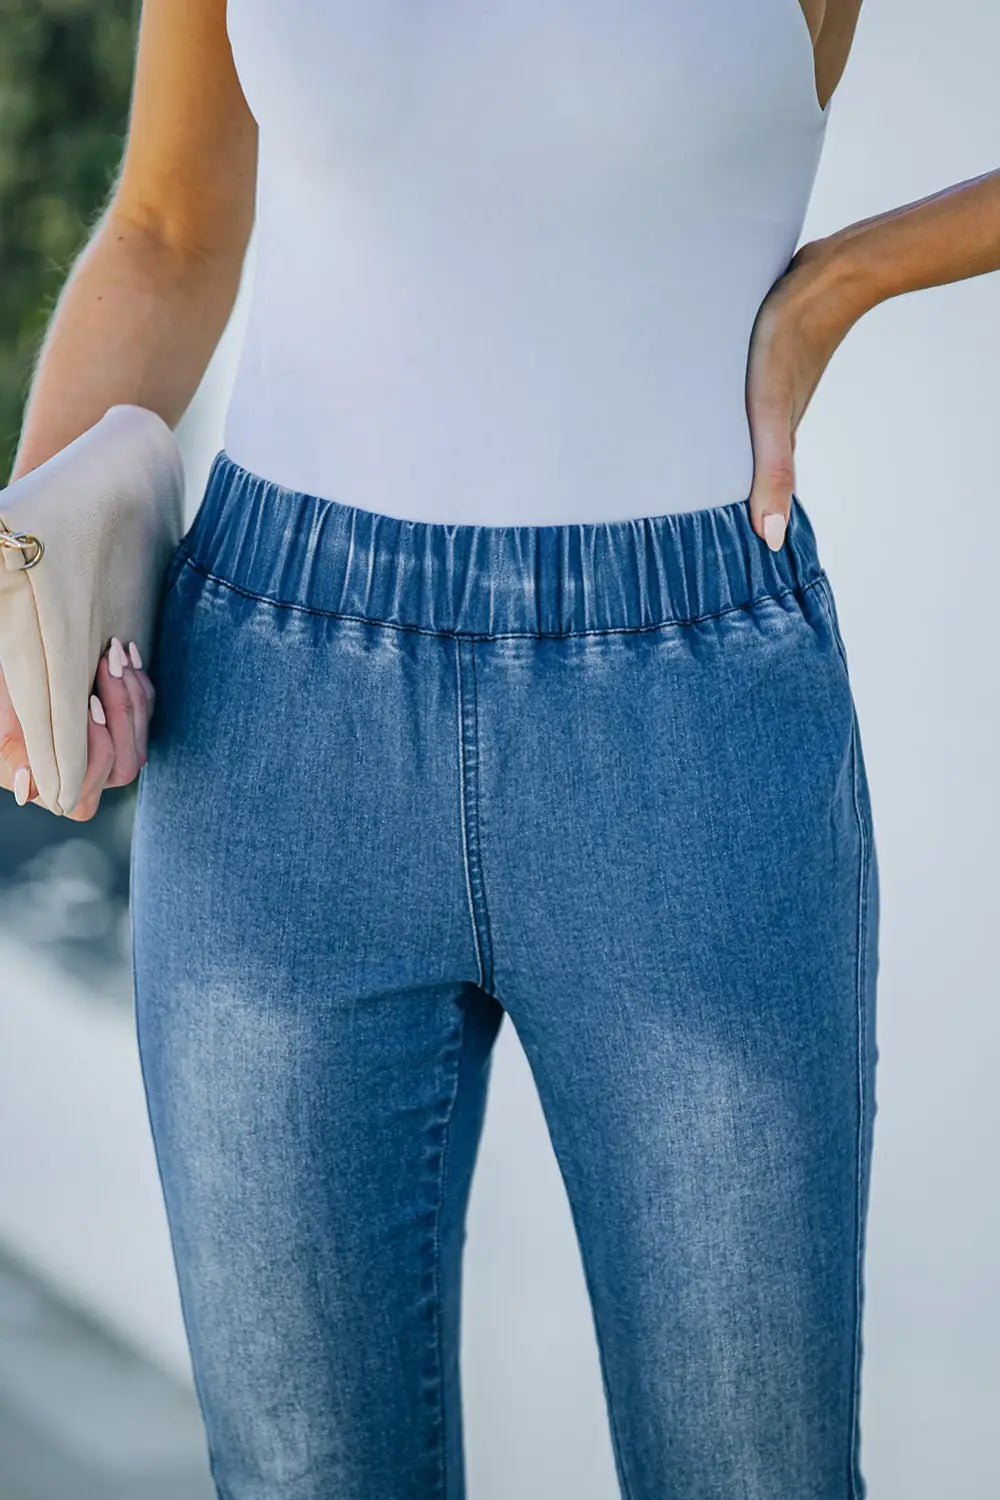 Black distressed bell bottom denim pants - jeans